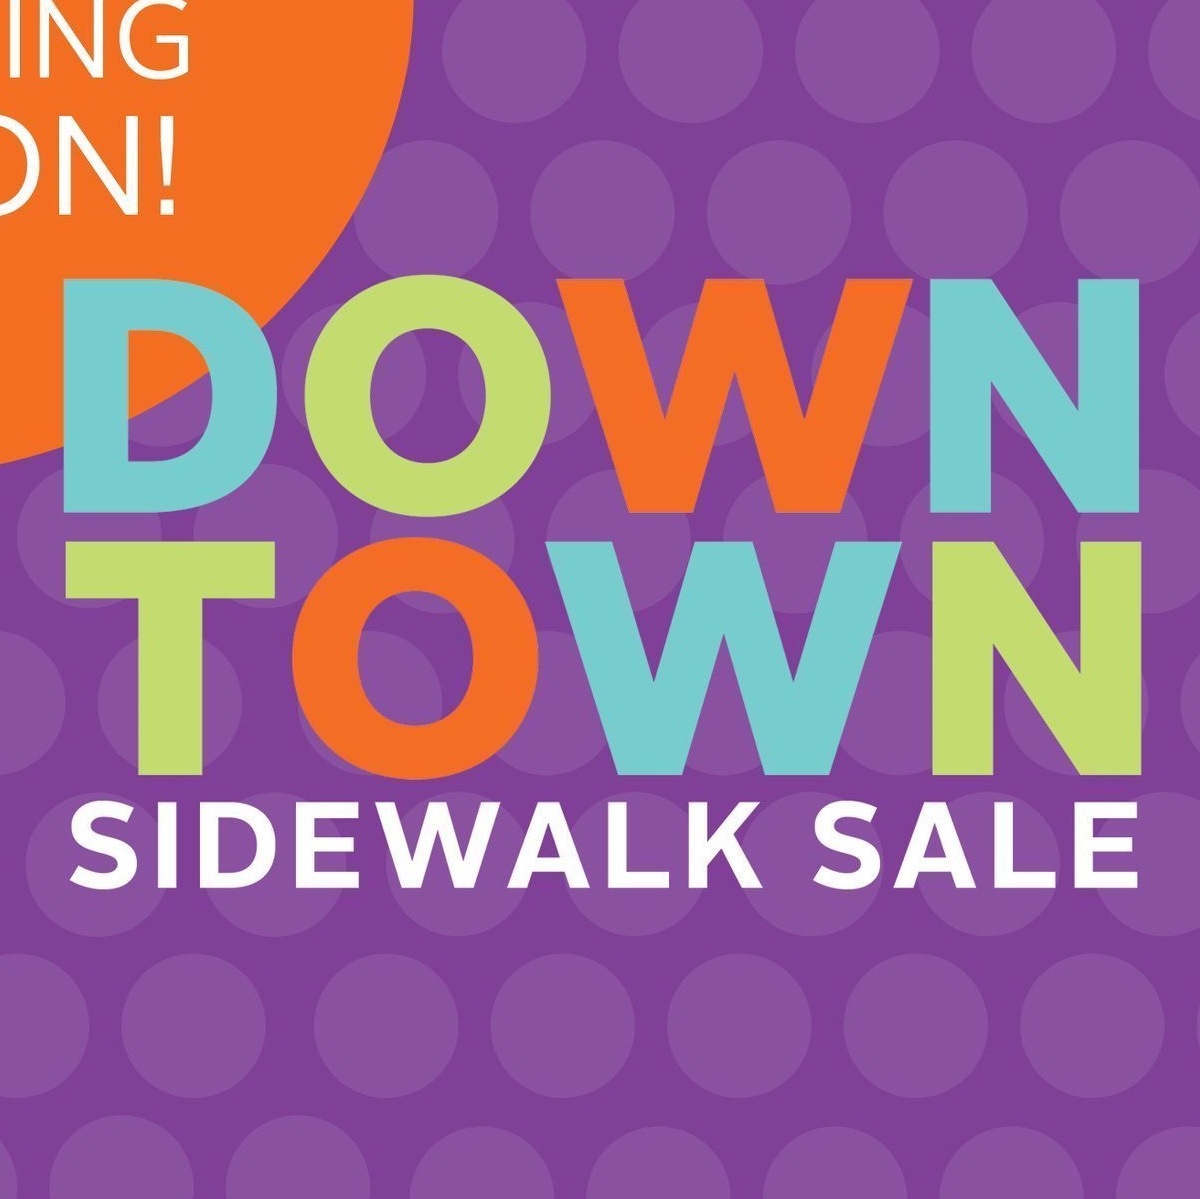 Downtown Sidewalk Sale